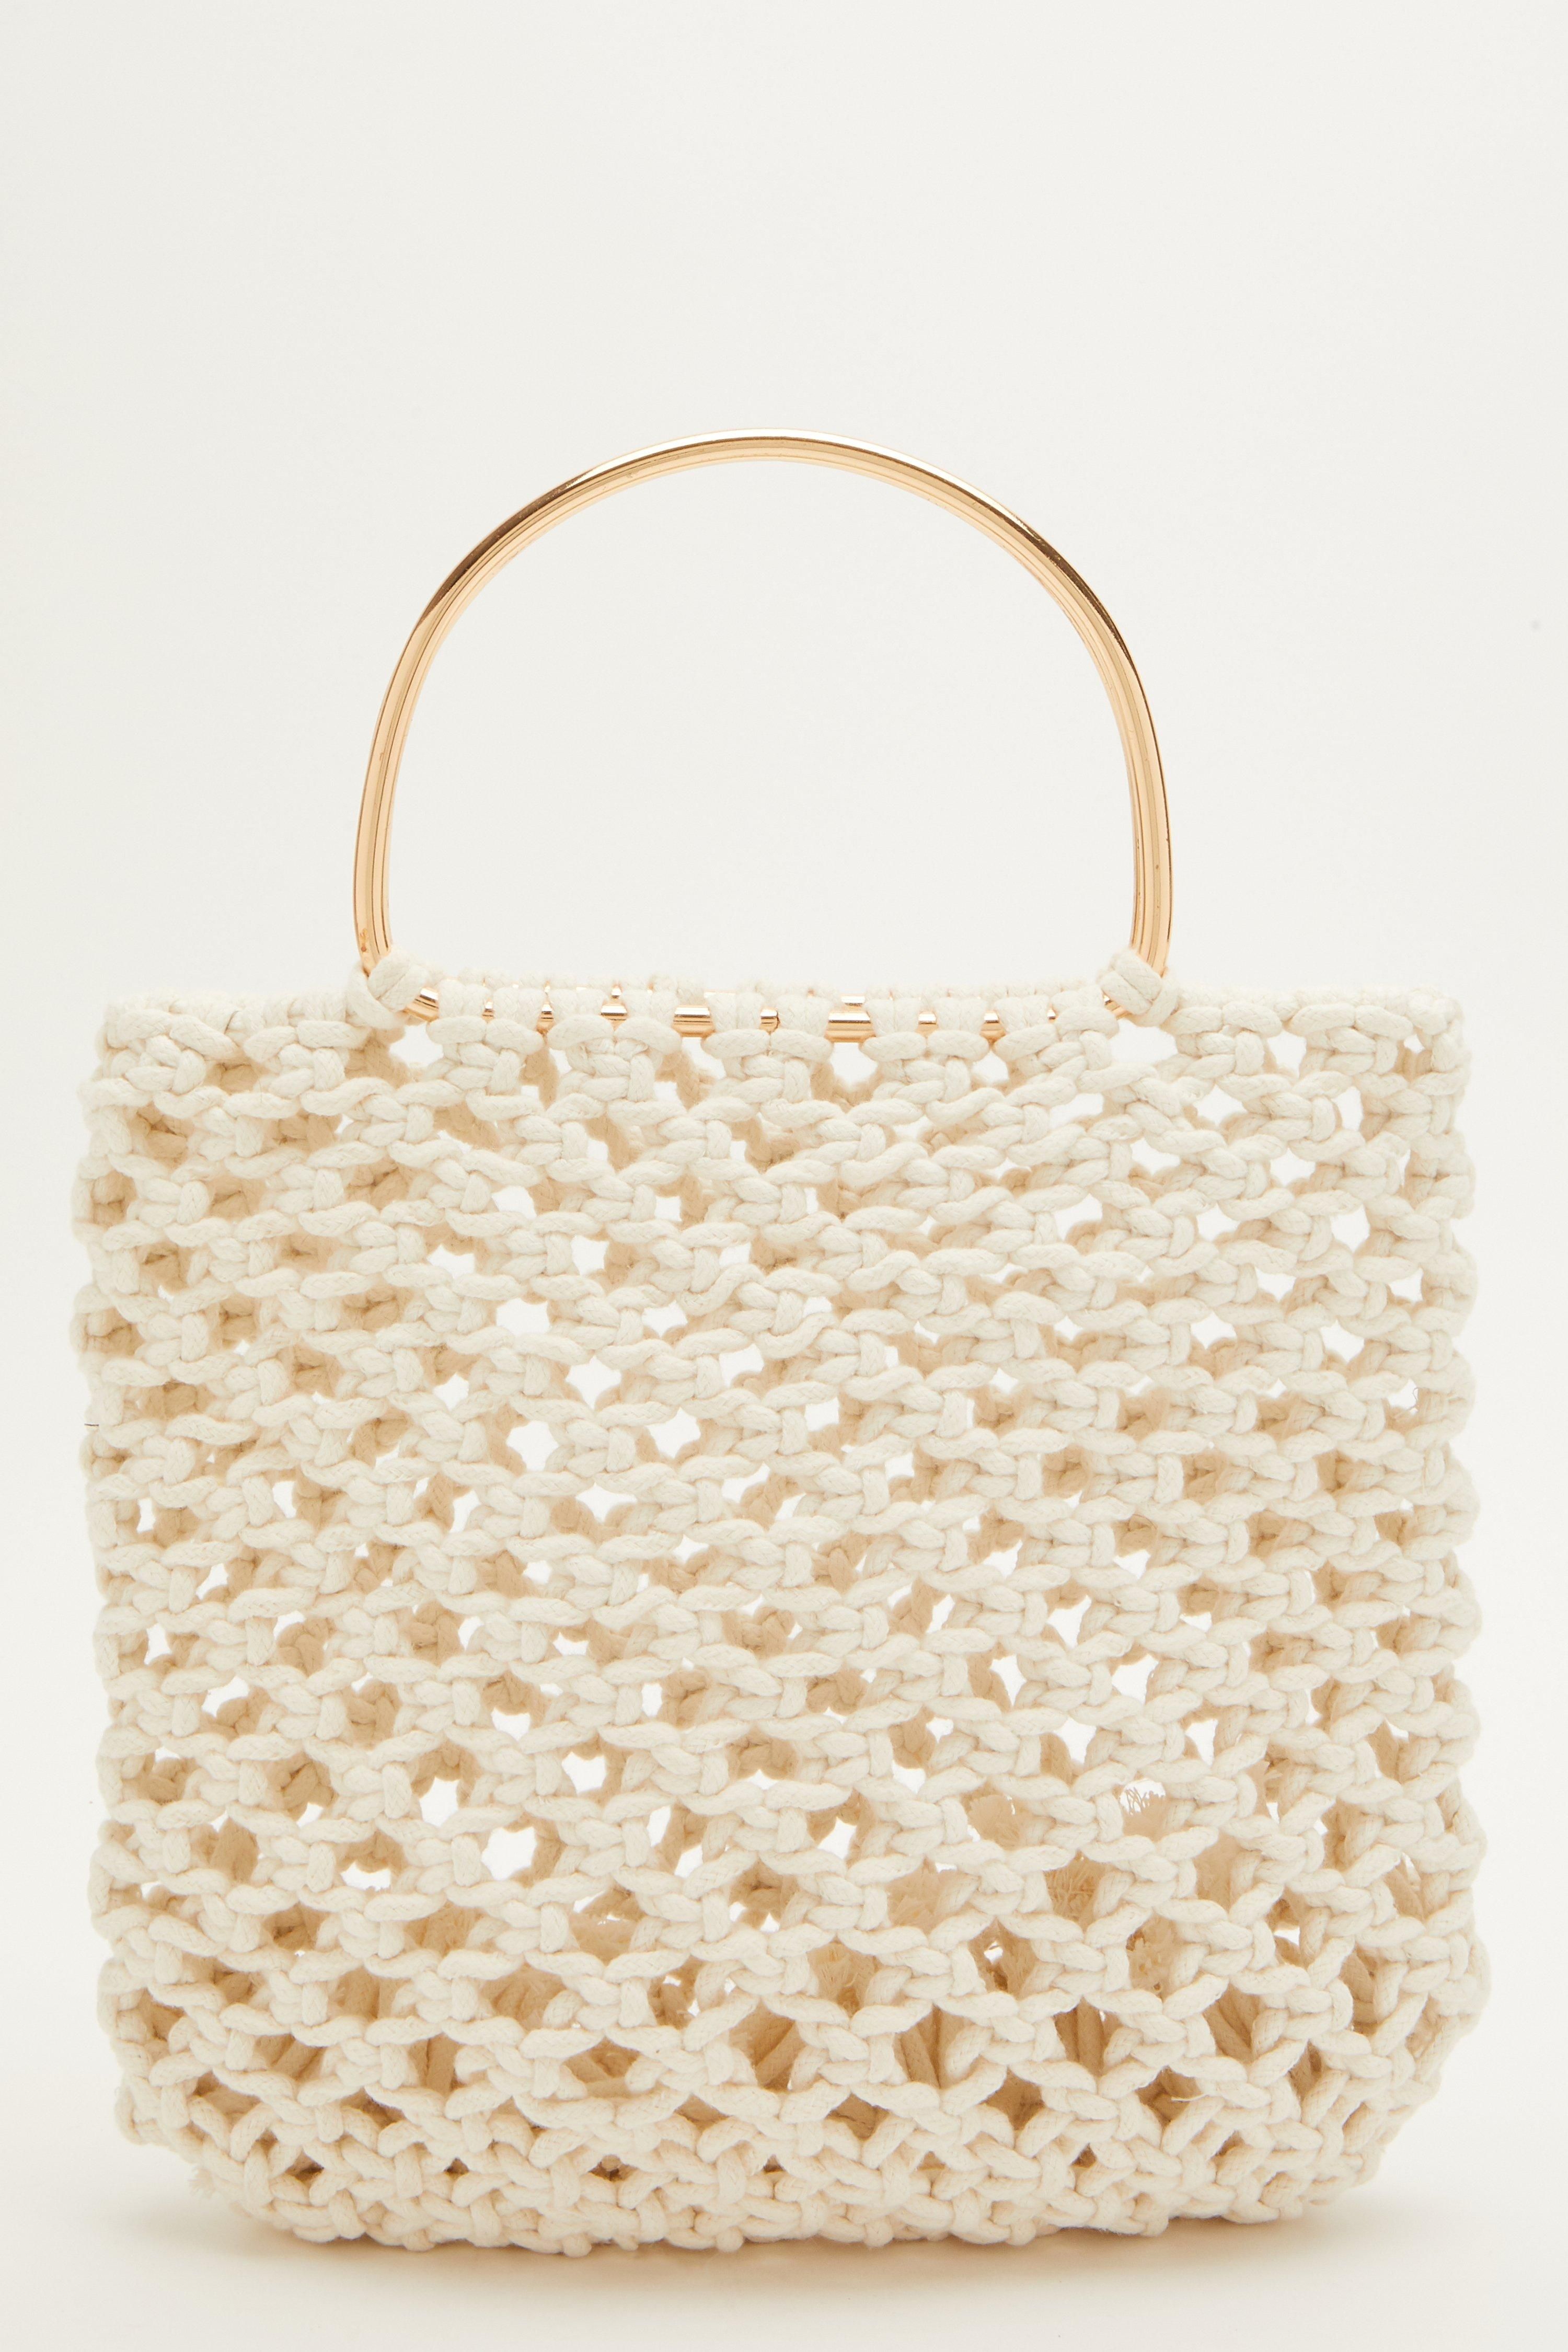 - Crochet finish  - Metal handle  - Handbag style  - Round handle